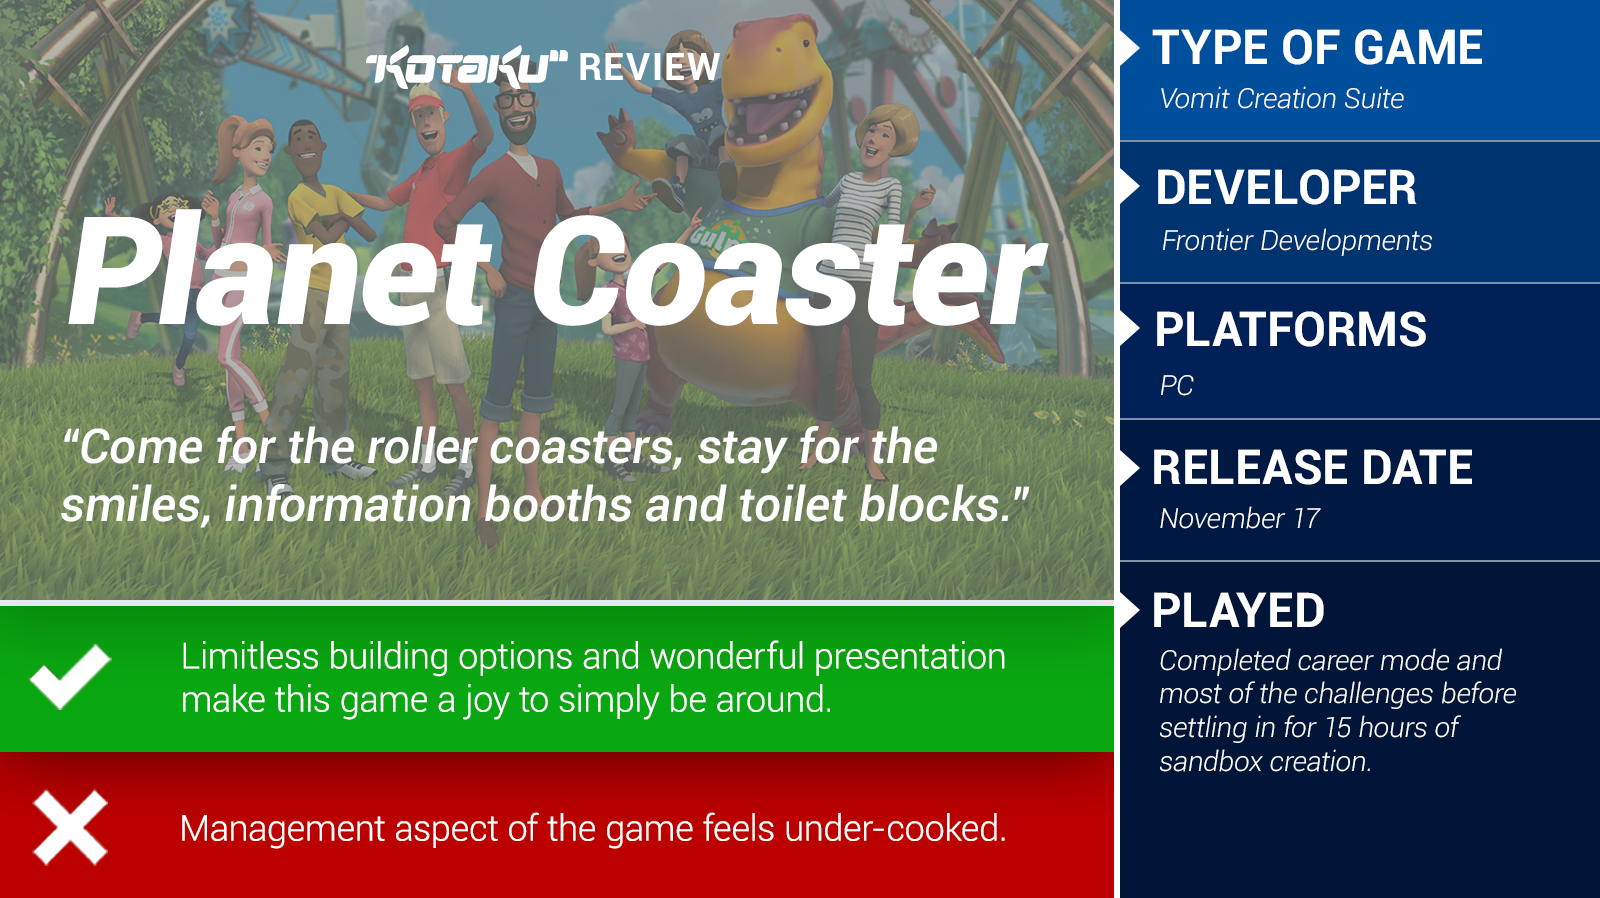 Planet Coaster: The Kotaku Review